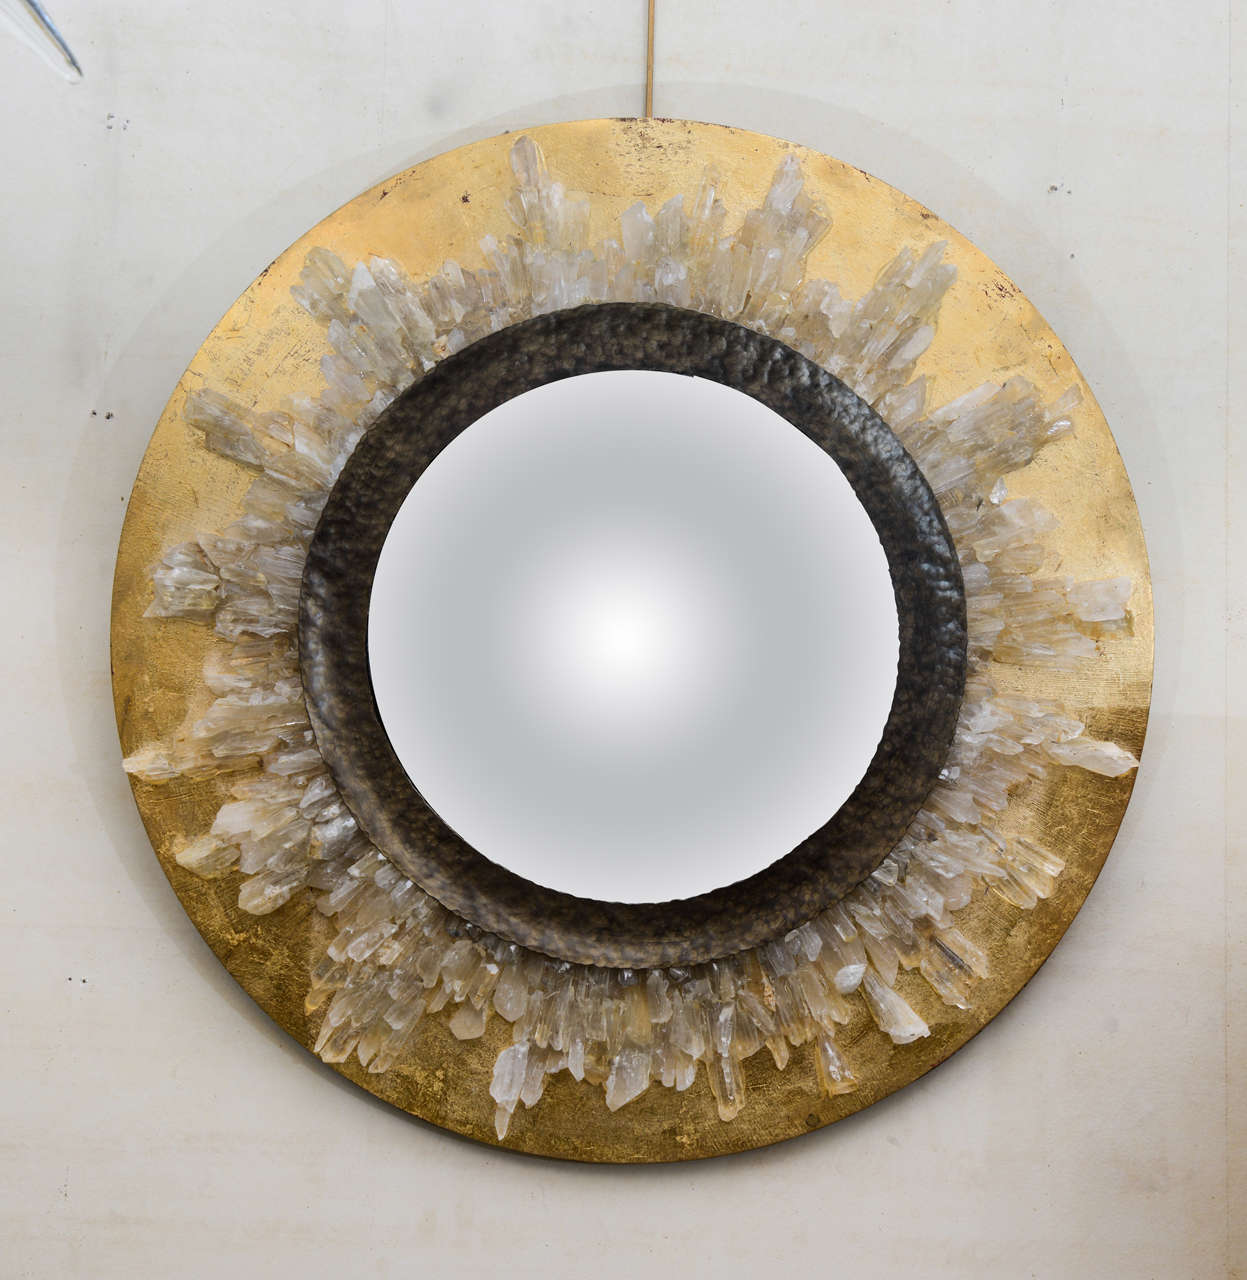 Sunburst mirror with rock crystal designed by Enzo Missoni.